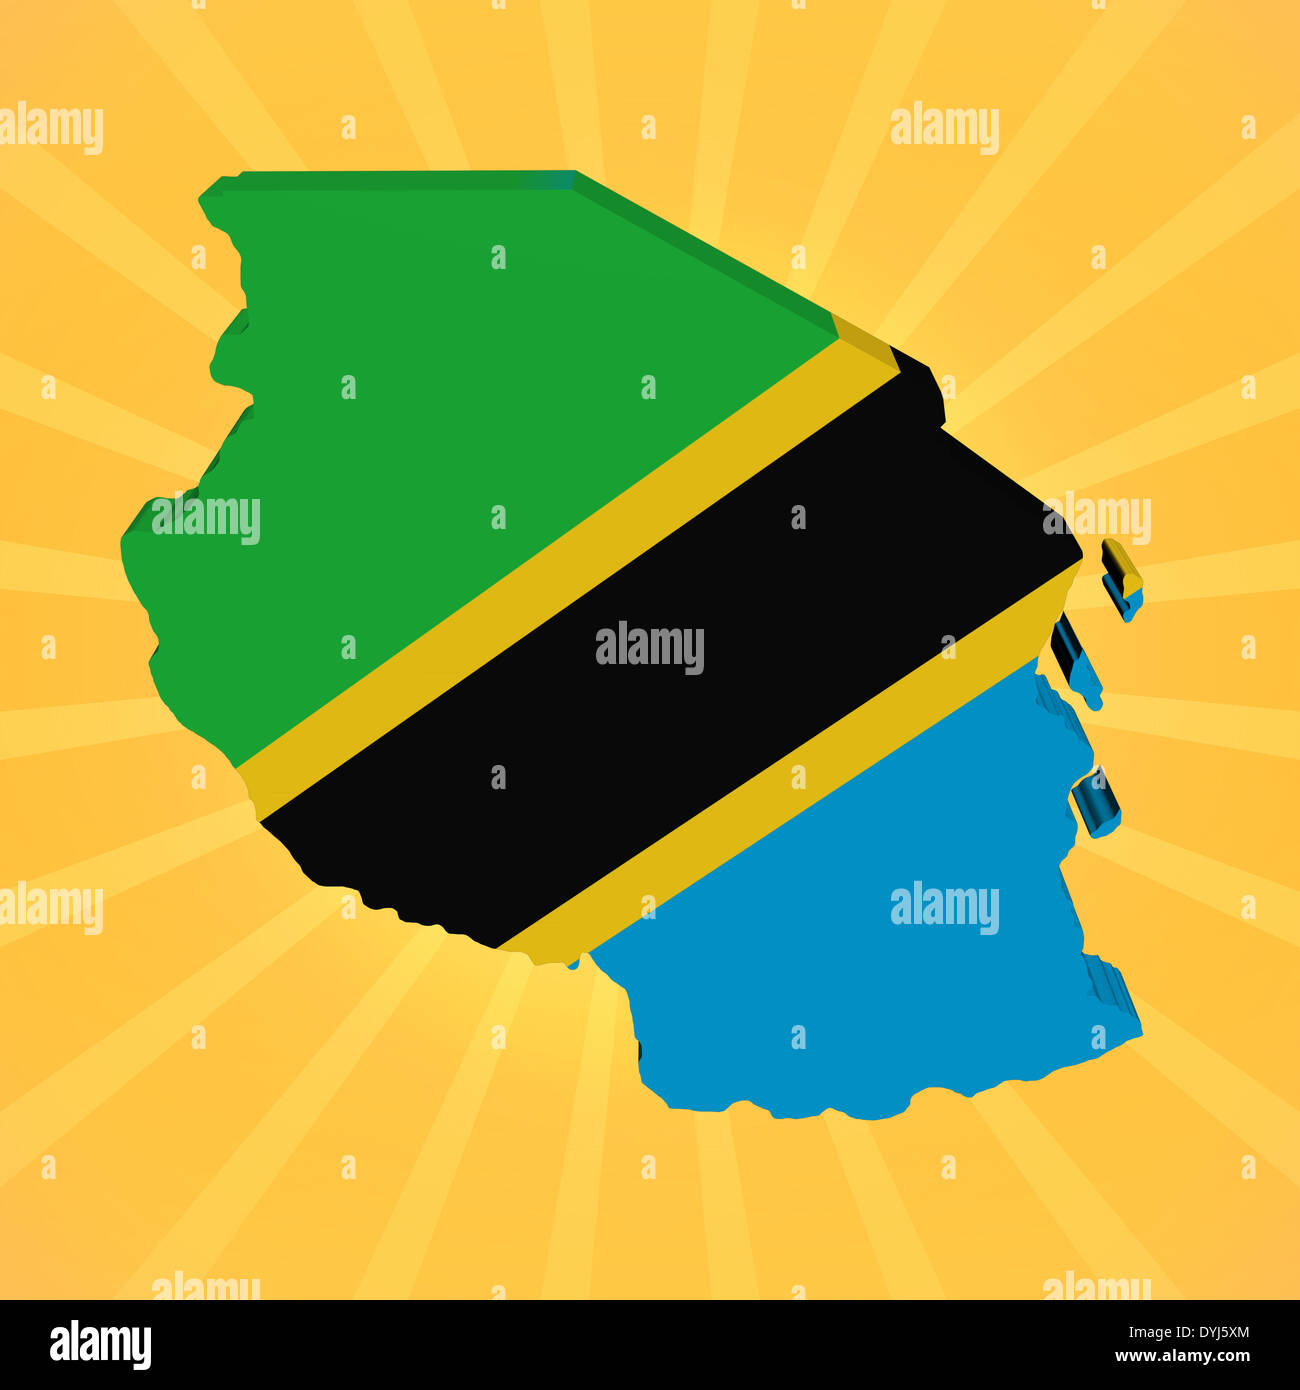 Tanzania map flag on sunburst illustration Stock Photo